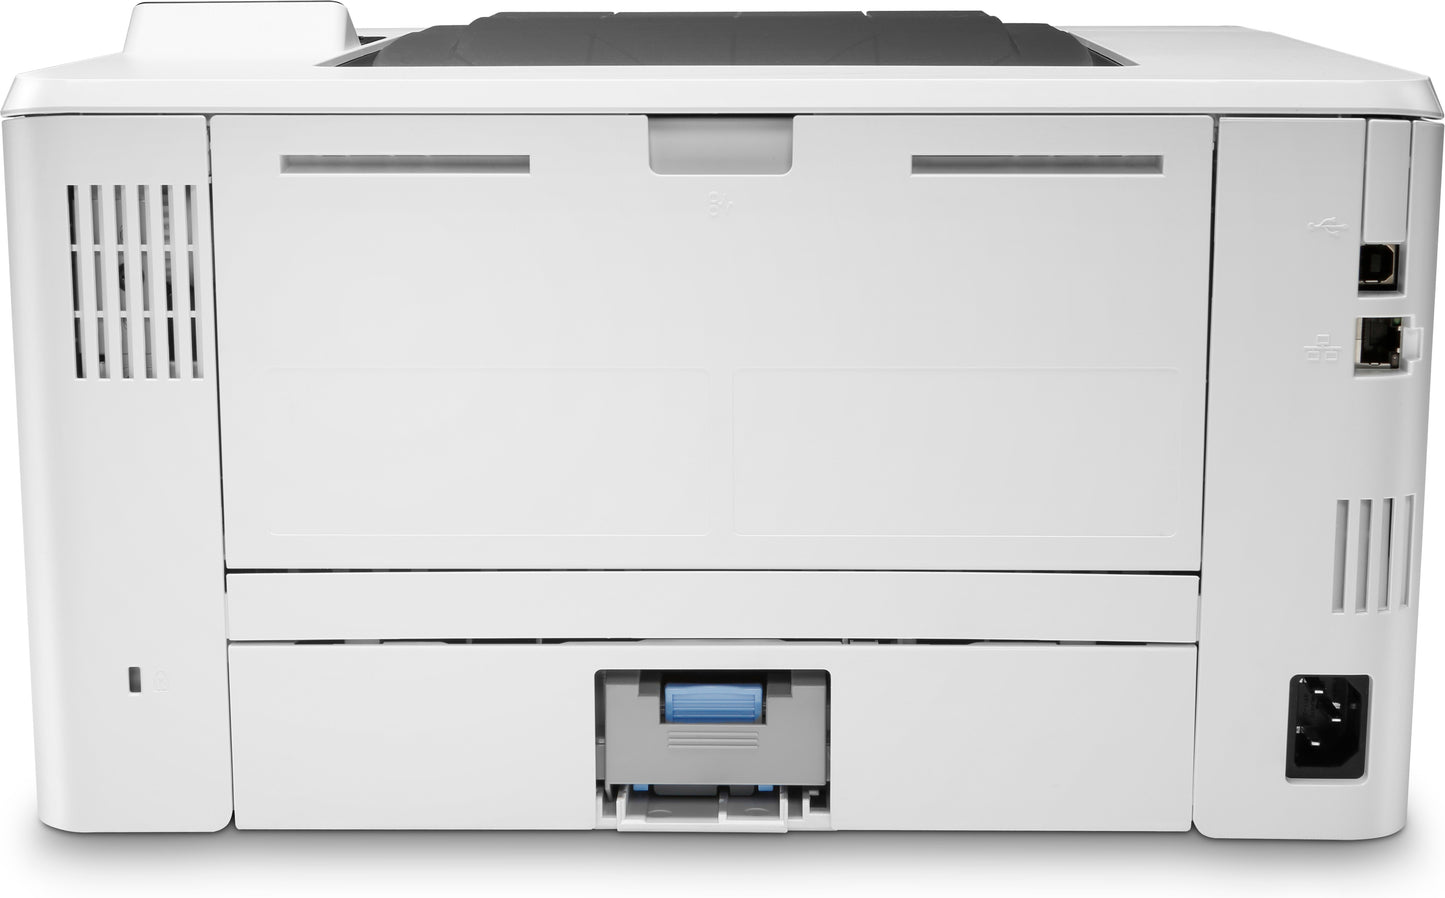 Impresora Laser Blanco y Negro HP M404n Red USB